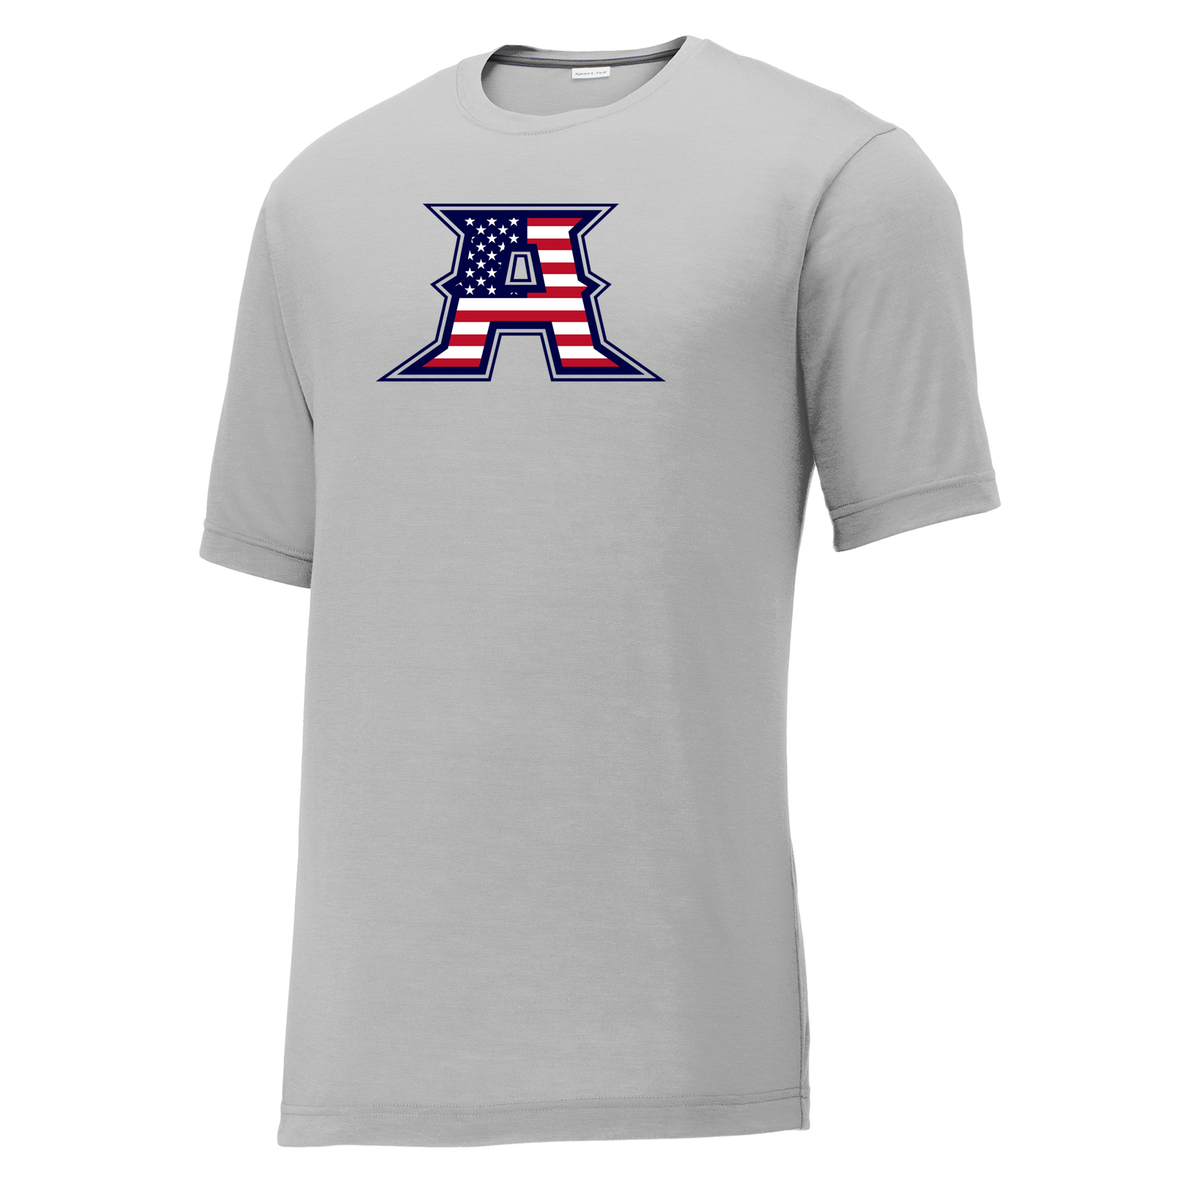 All American Baseball CottonTouch Performance T-Shirt